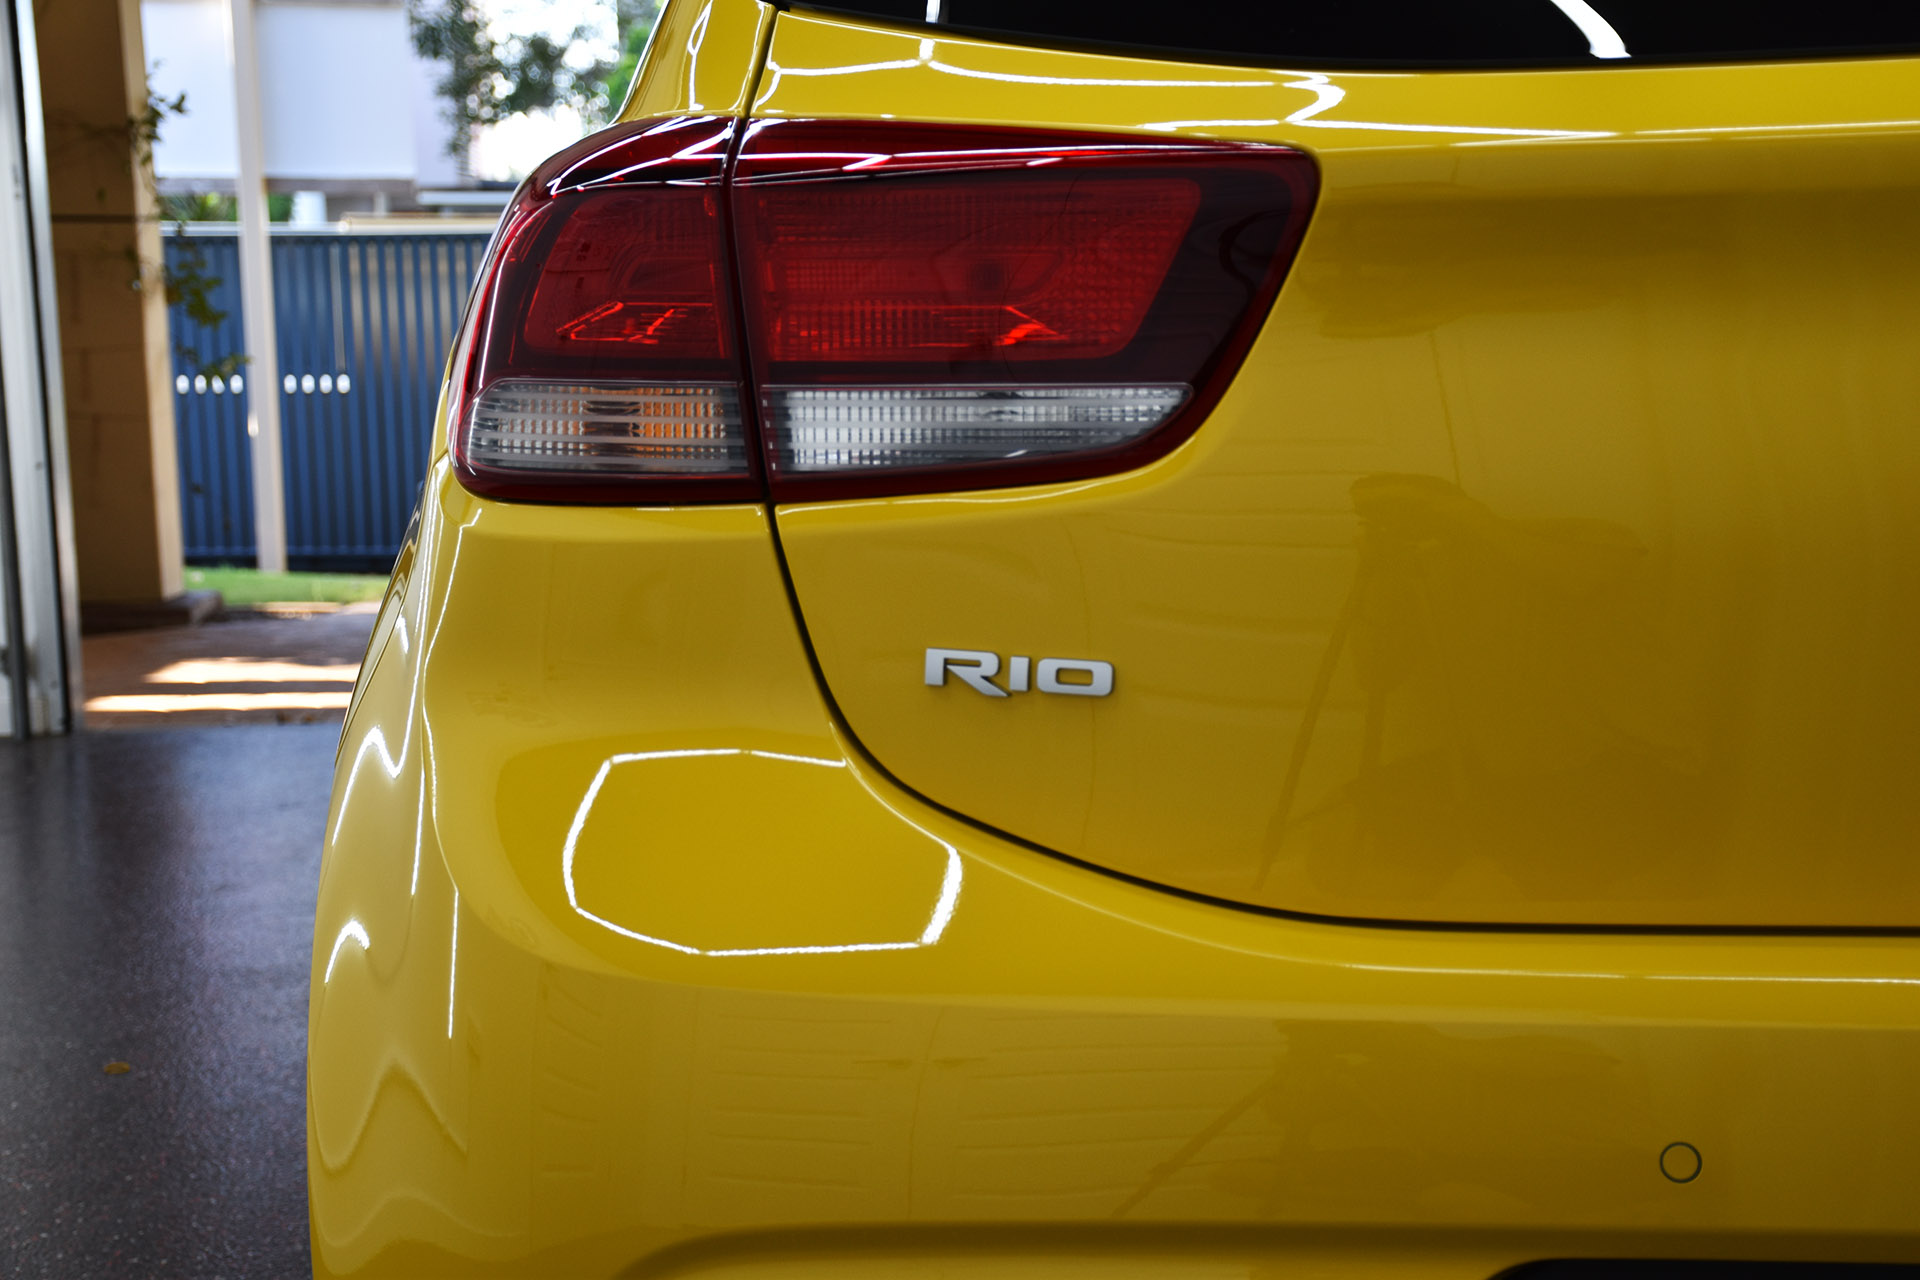 Kia Rio New Car Protection and Ceramic Coating 2